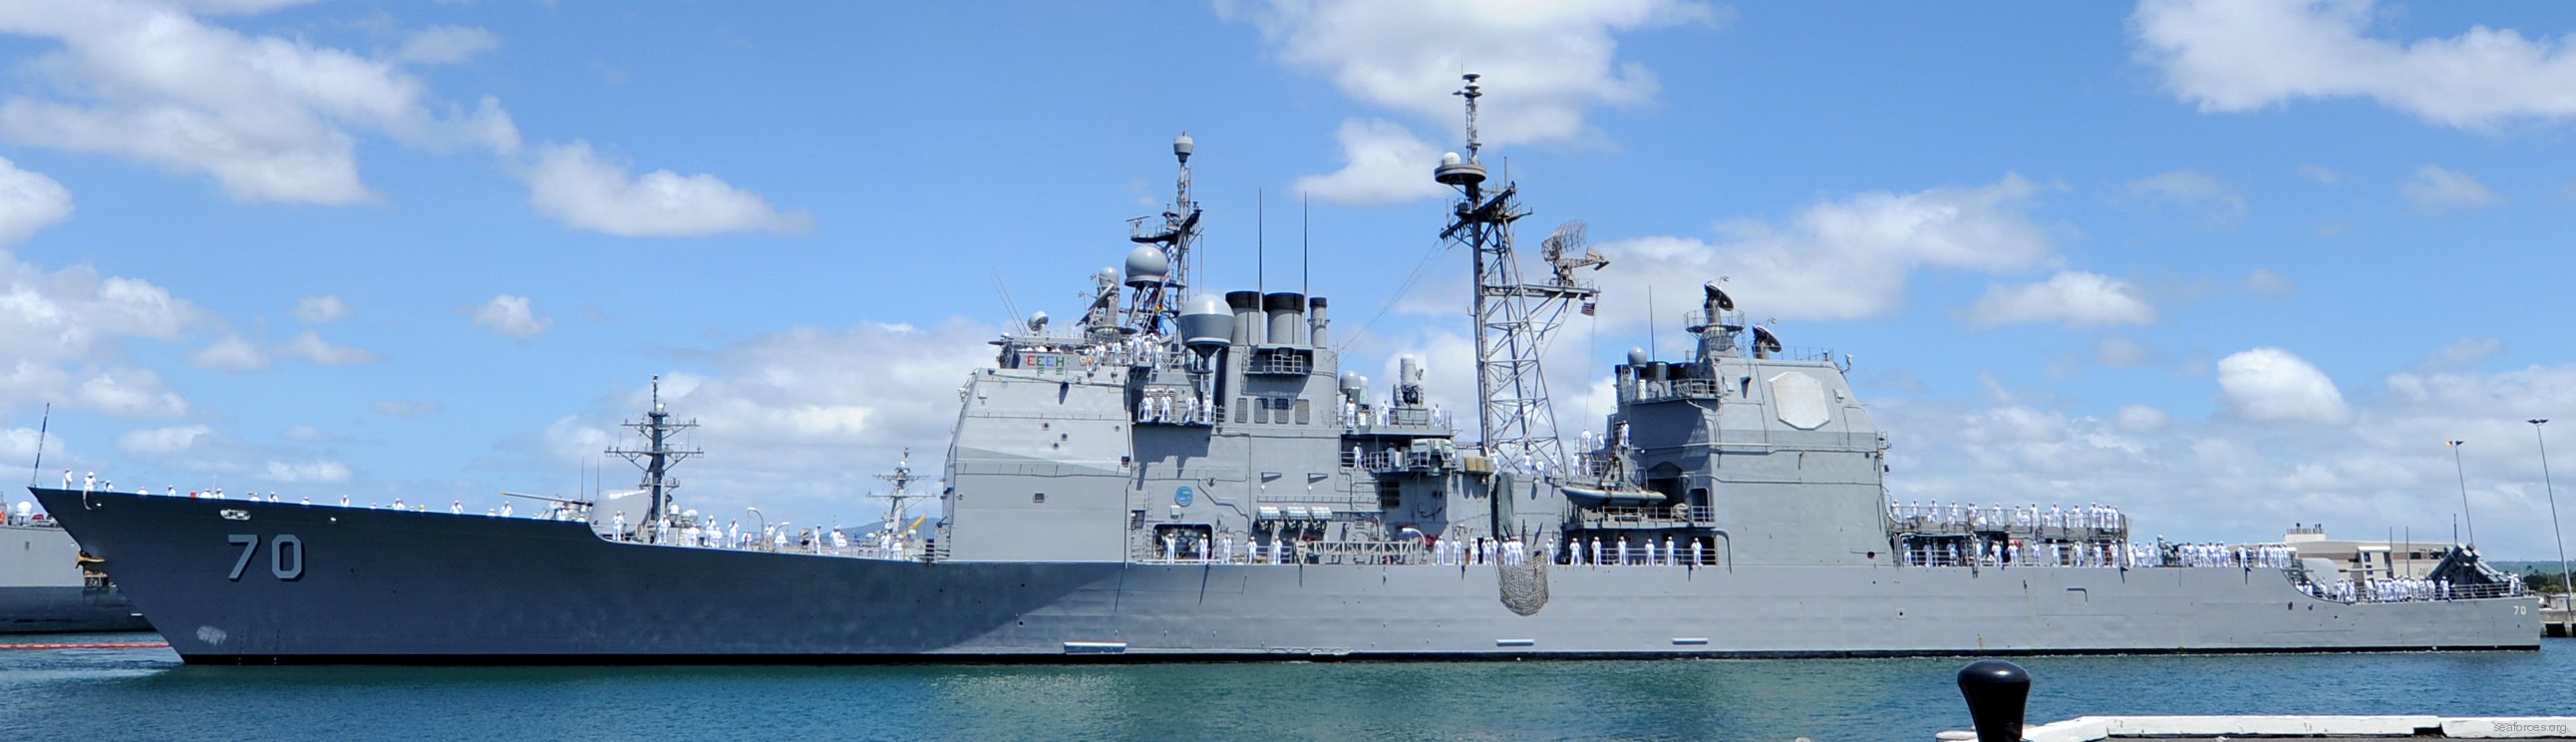 cg-70 uss lake erie ticonderoga class guided missile cruiser navy 124 pearl harbor hickam